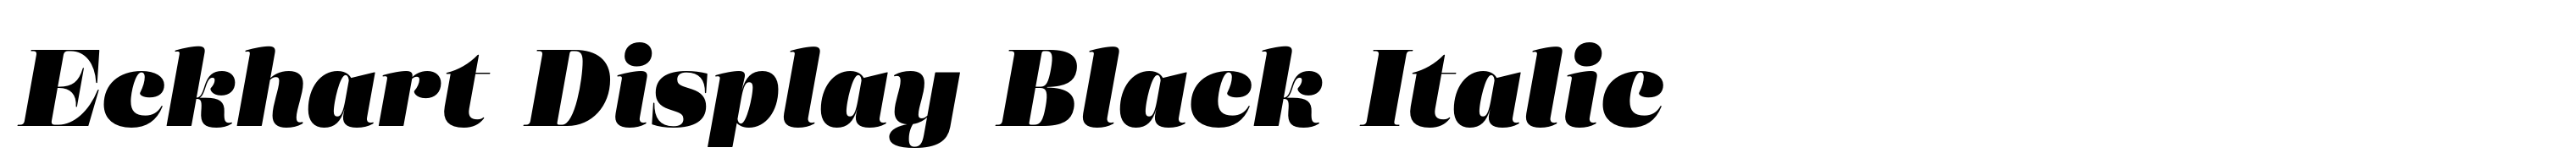 Eckhart Display Black Italic